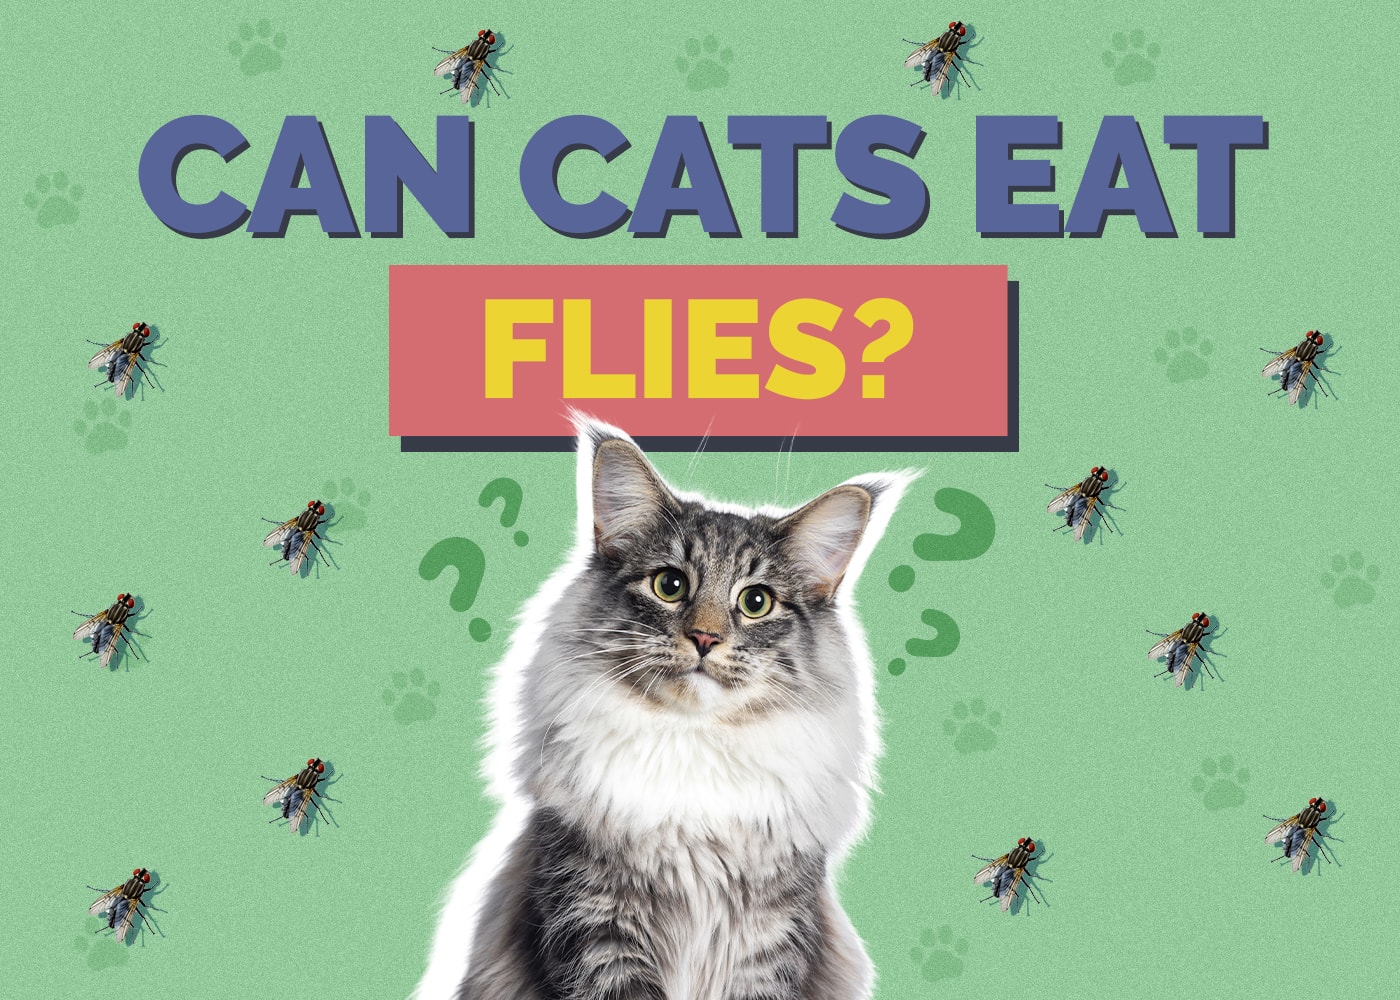 Can Cats Eat flies